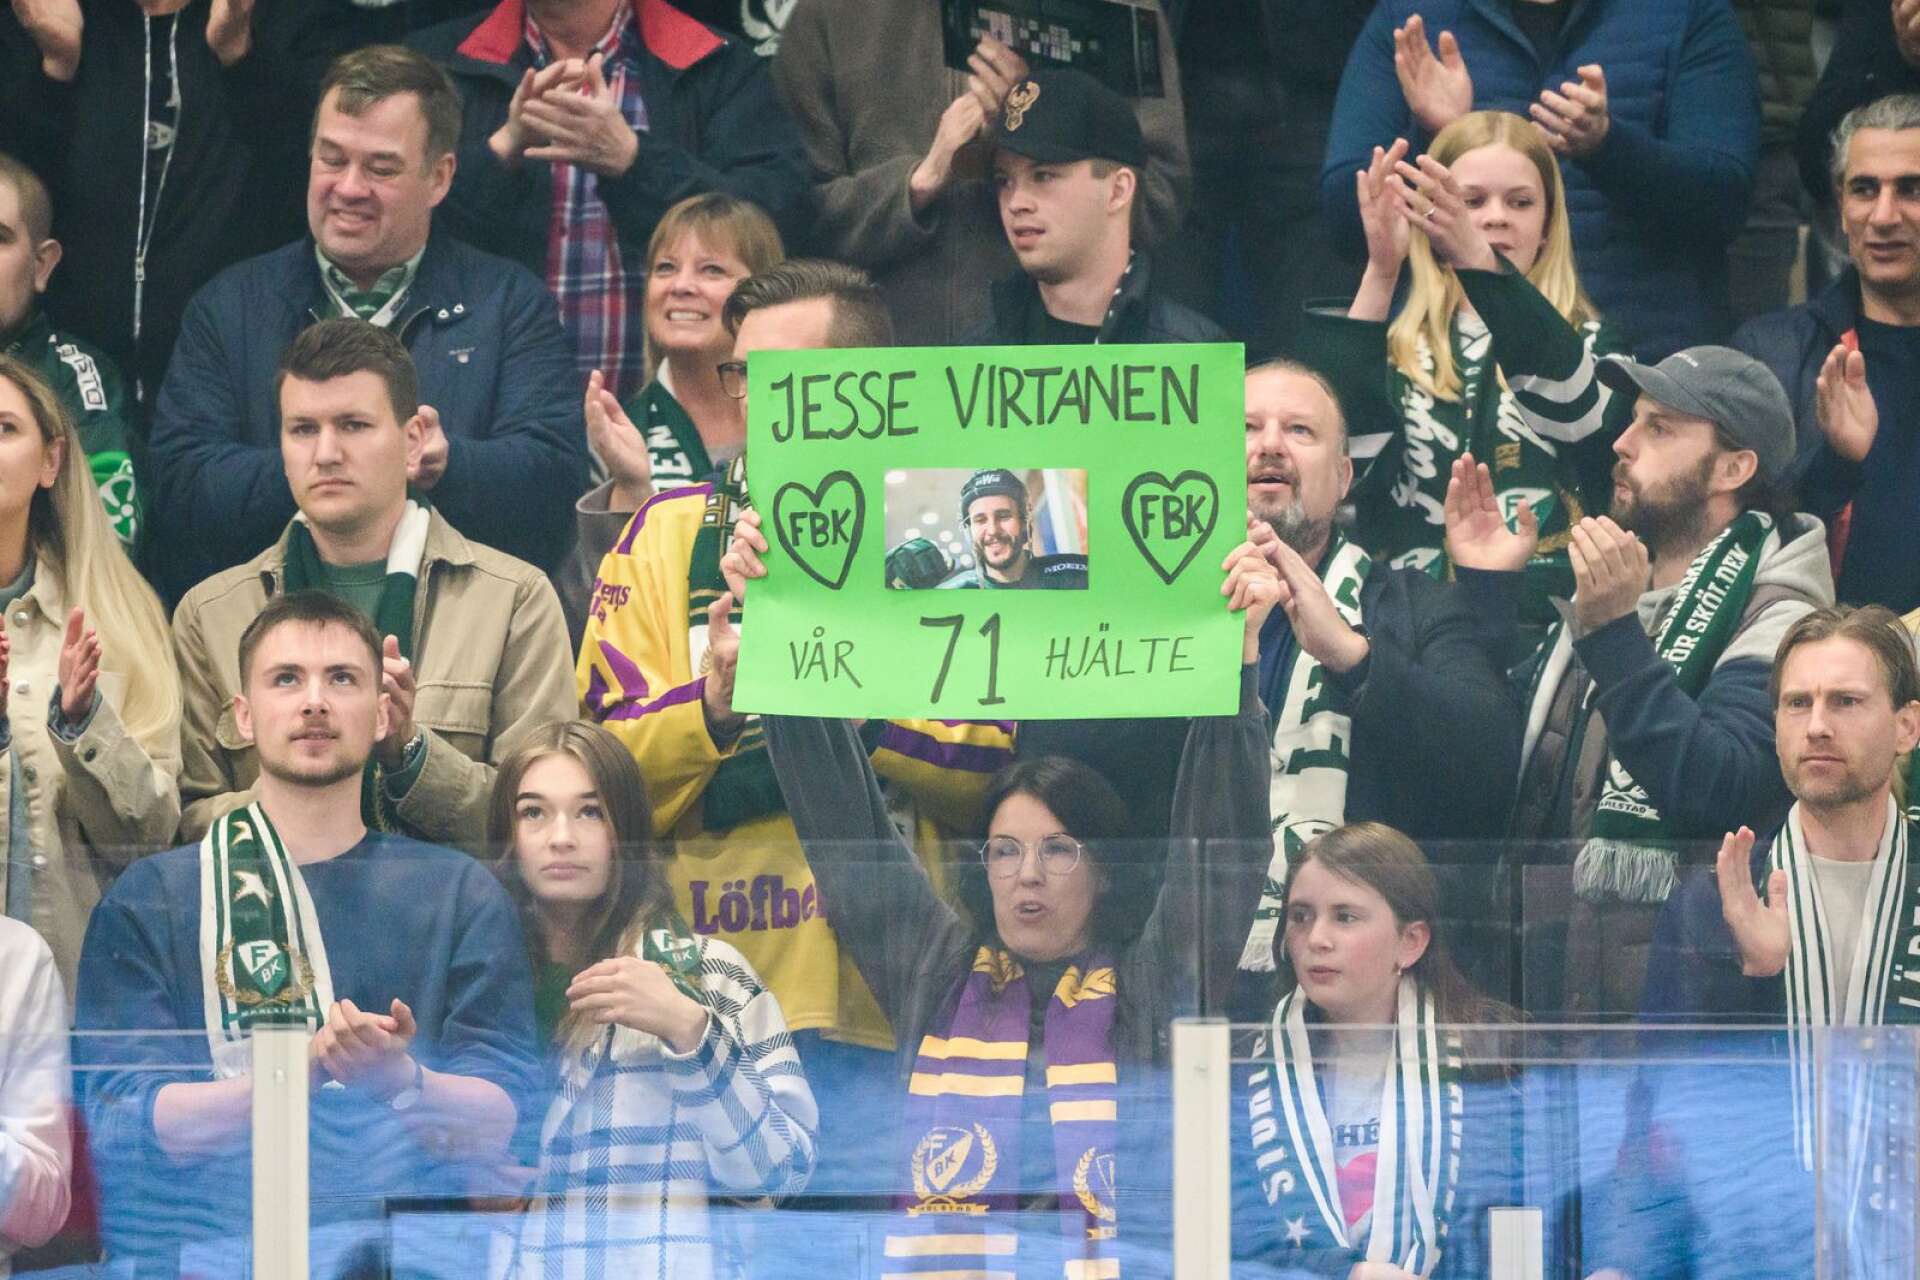 Jesse-fans i Löfbergs Arena.